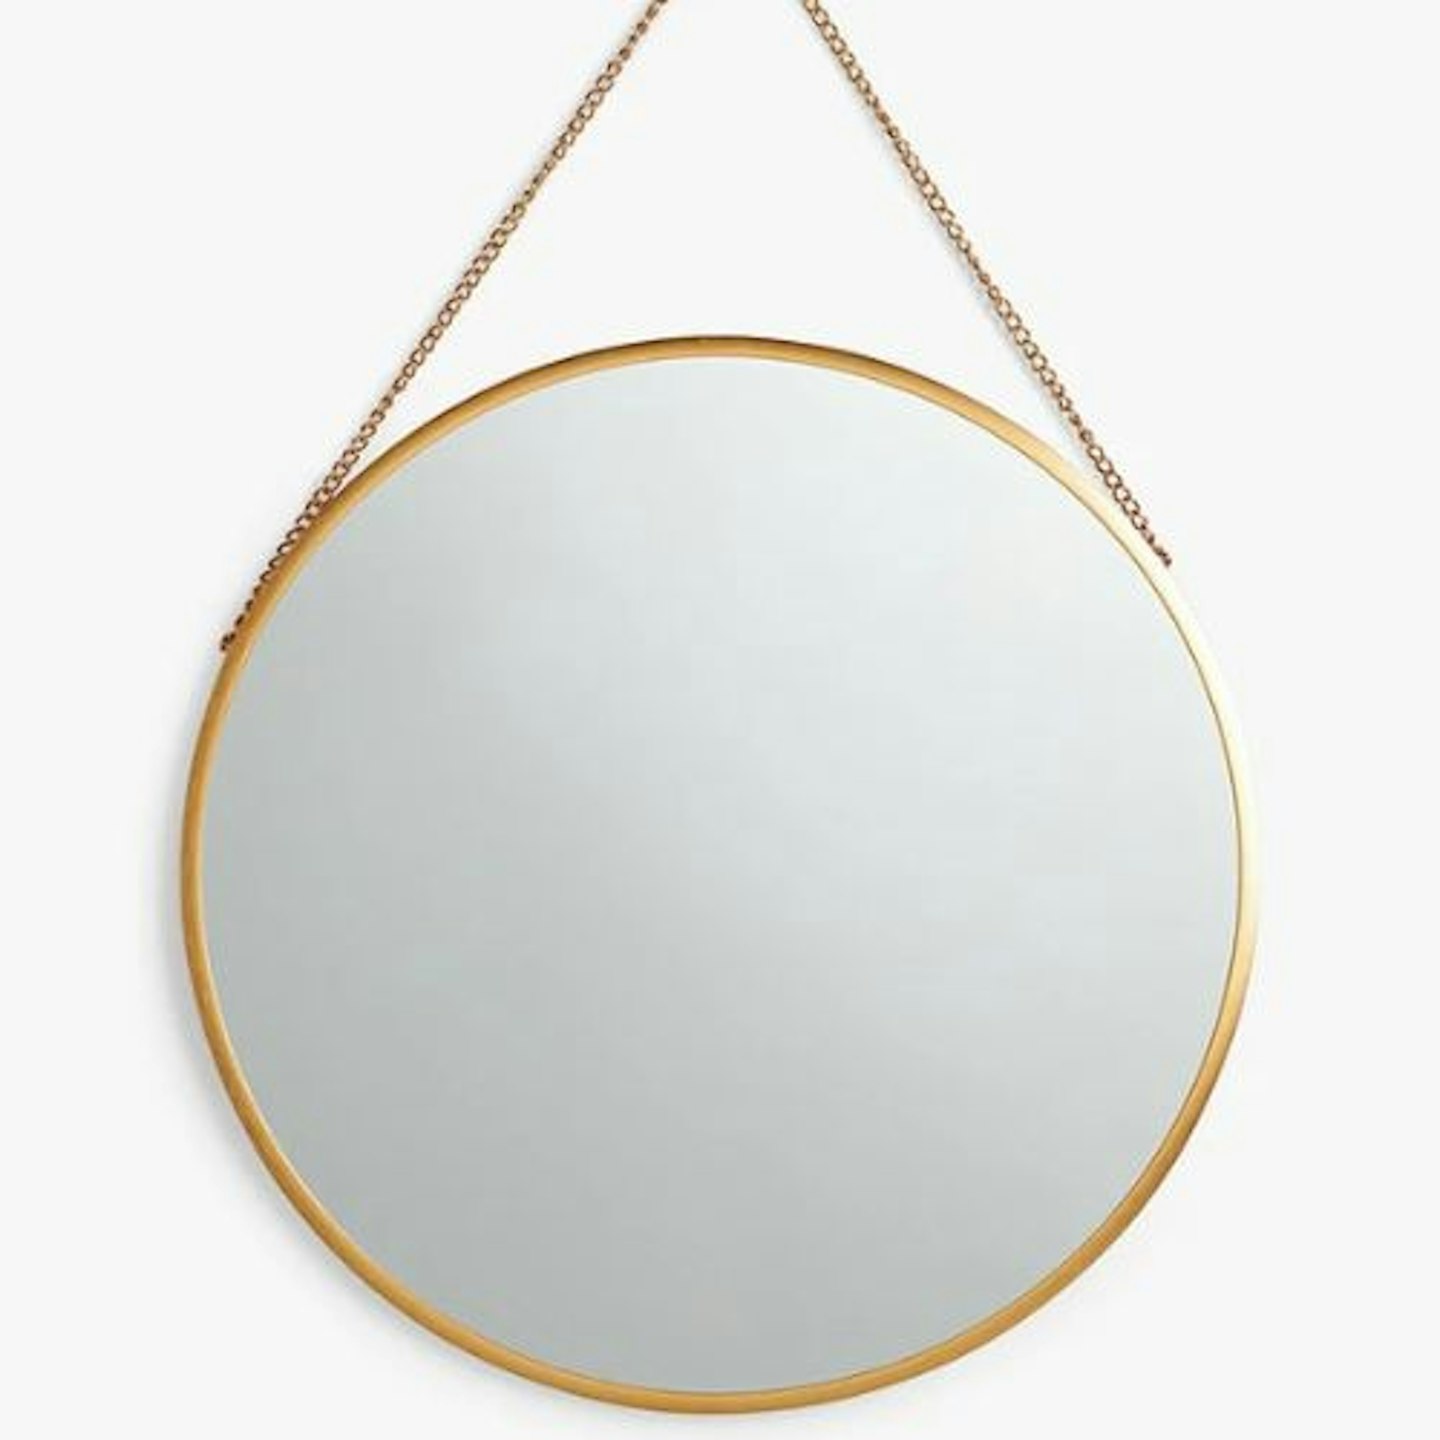 John Lewis ANYDAY Round Metal Frame Chain Hanging Mirror, 50cm, Gold